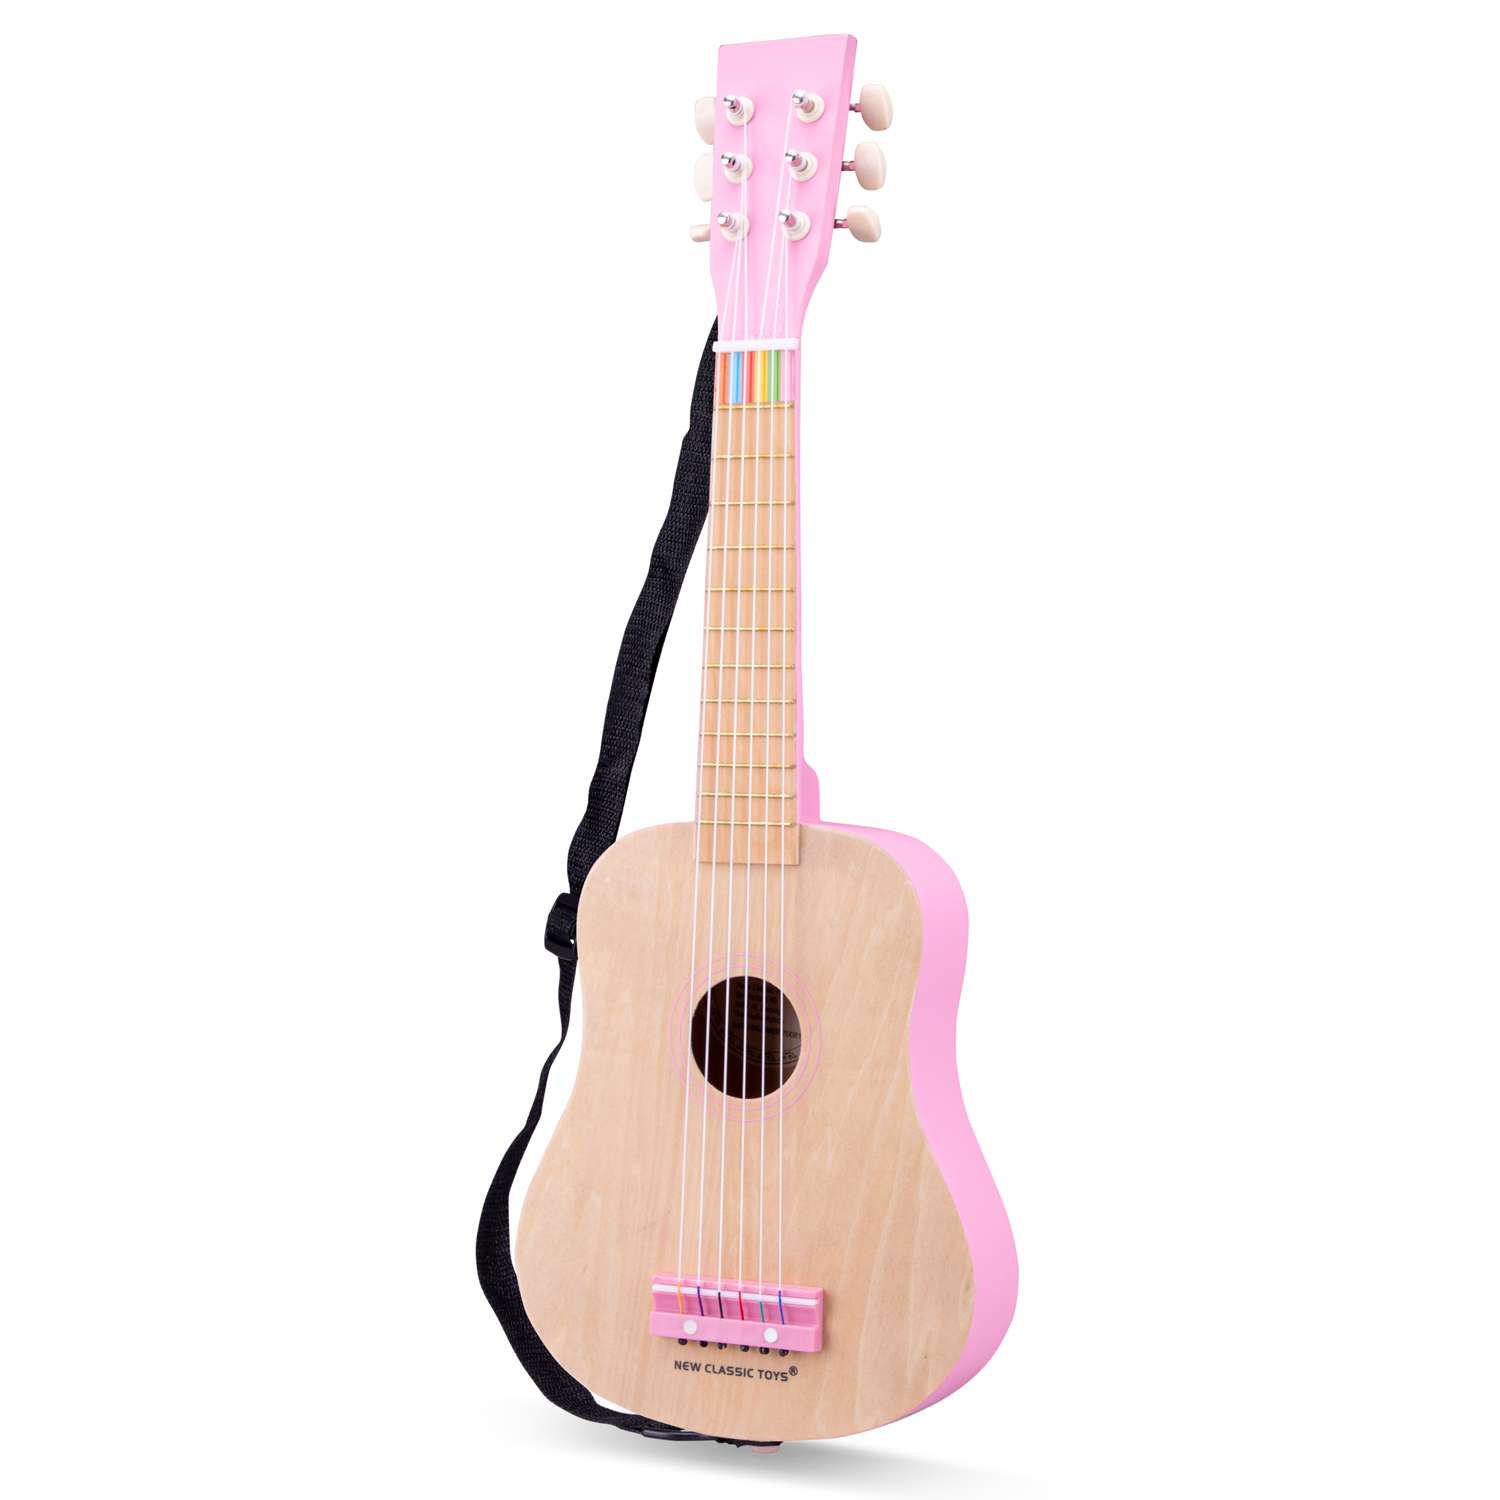 Гитара New Classic Toys 64 см. розовая 10302 - фото 1